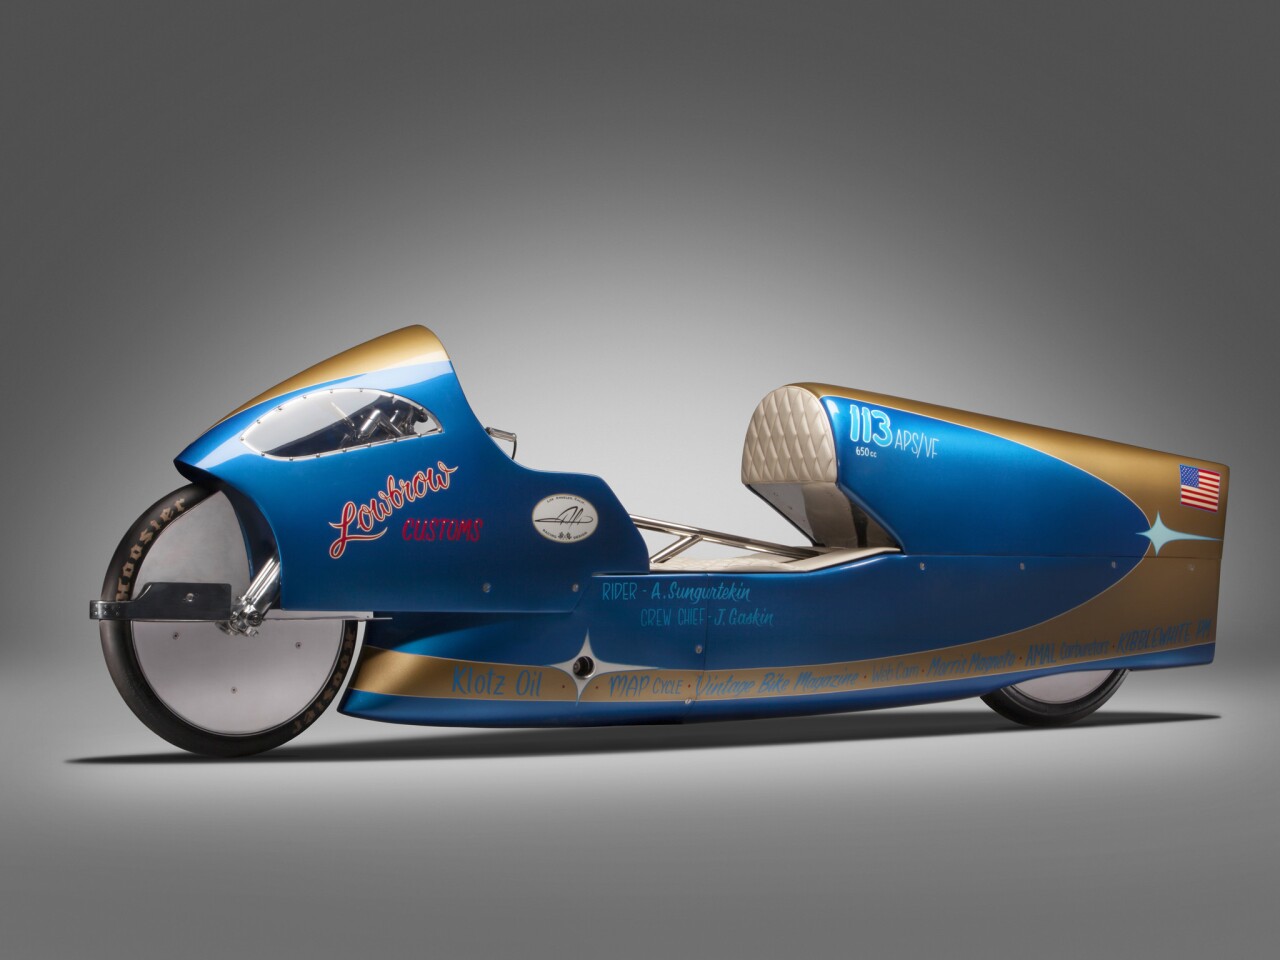 The Alp Racing Design Asymmetric Aero (2014) is part of the custom motorcycle exhibit at the Petersen Automotive Museum.